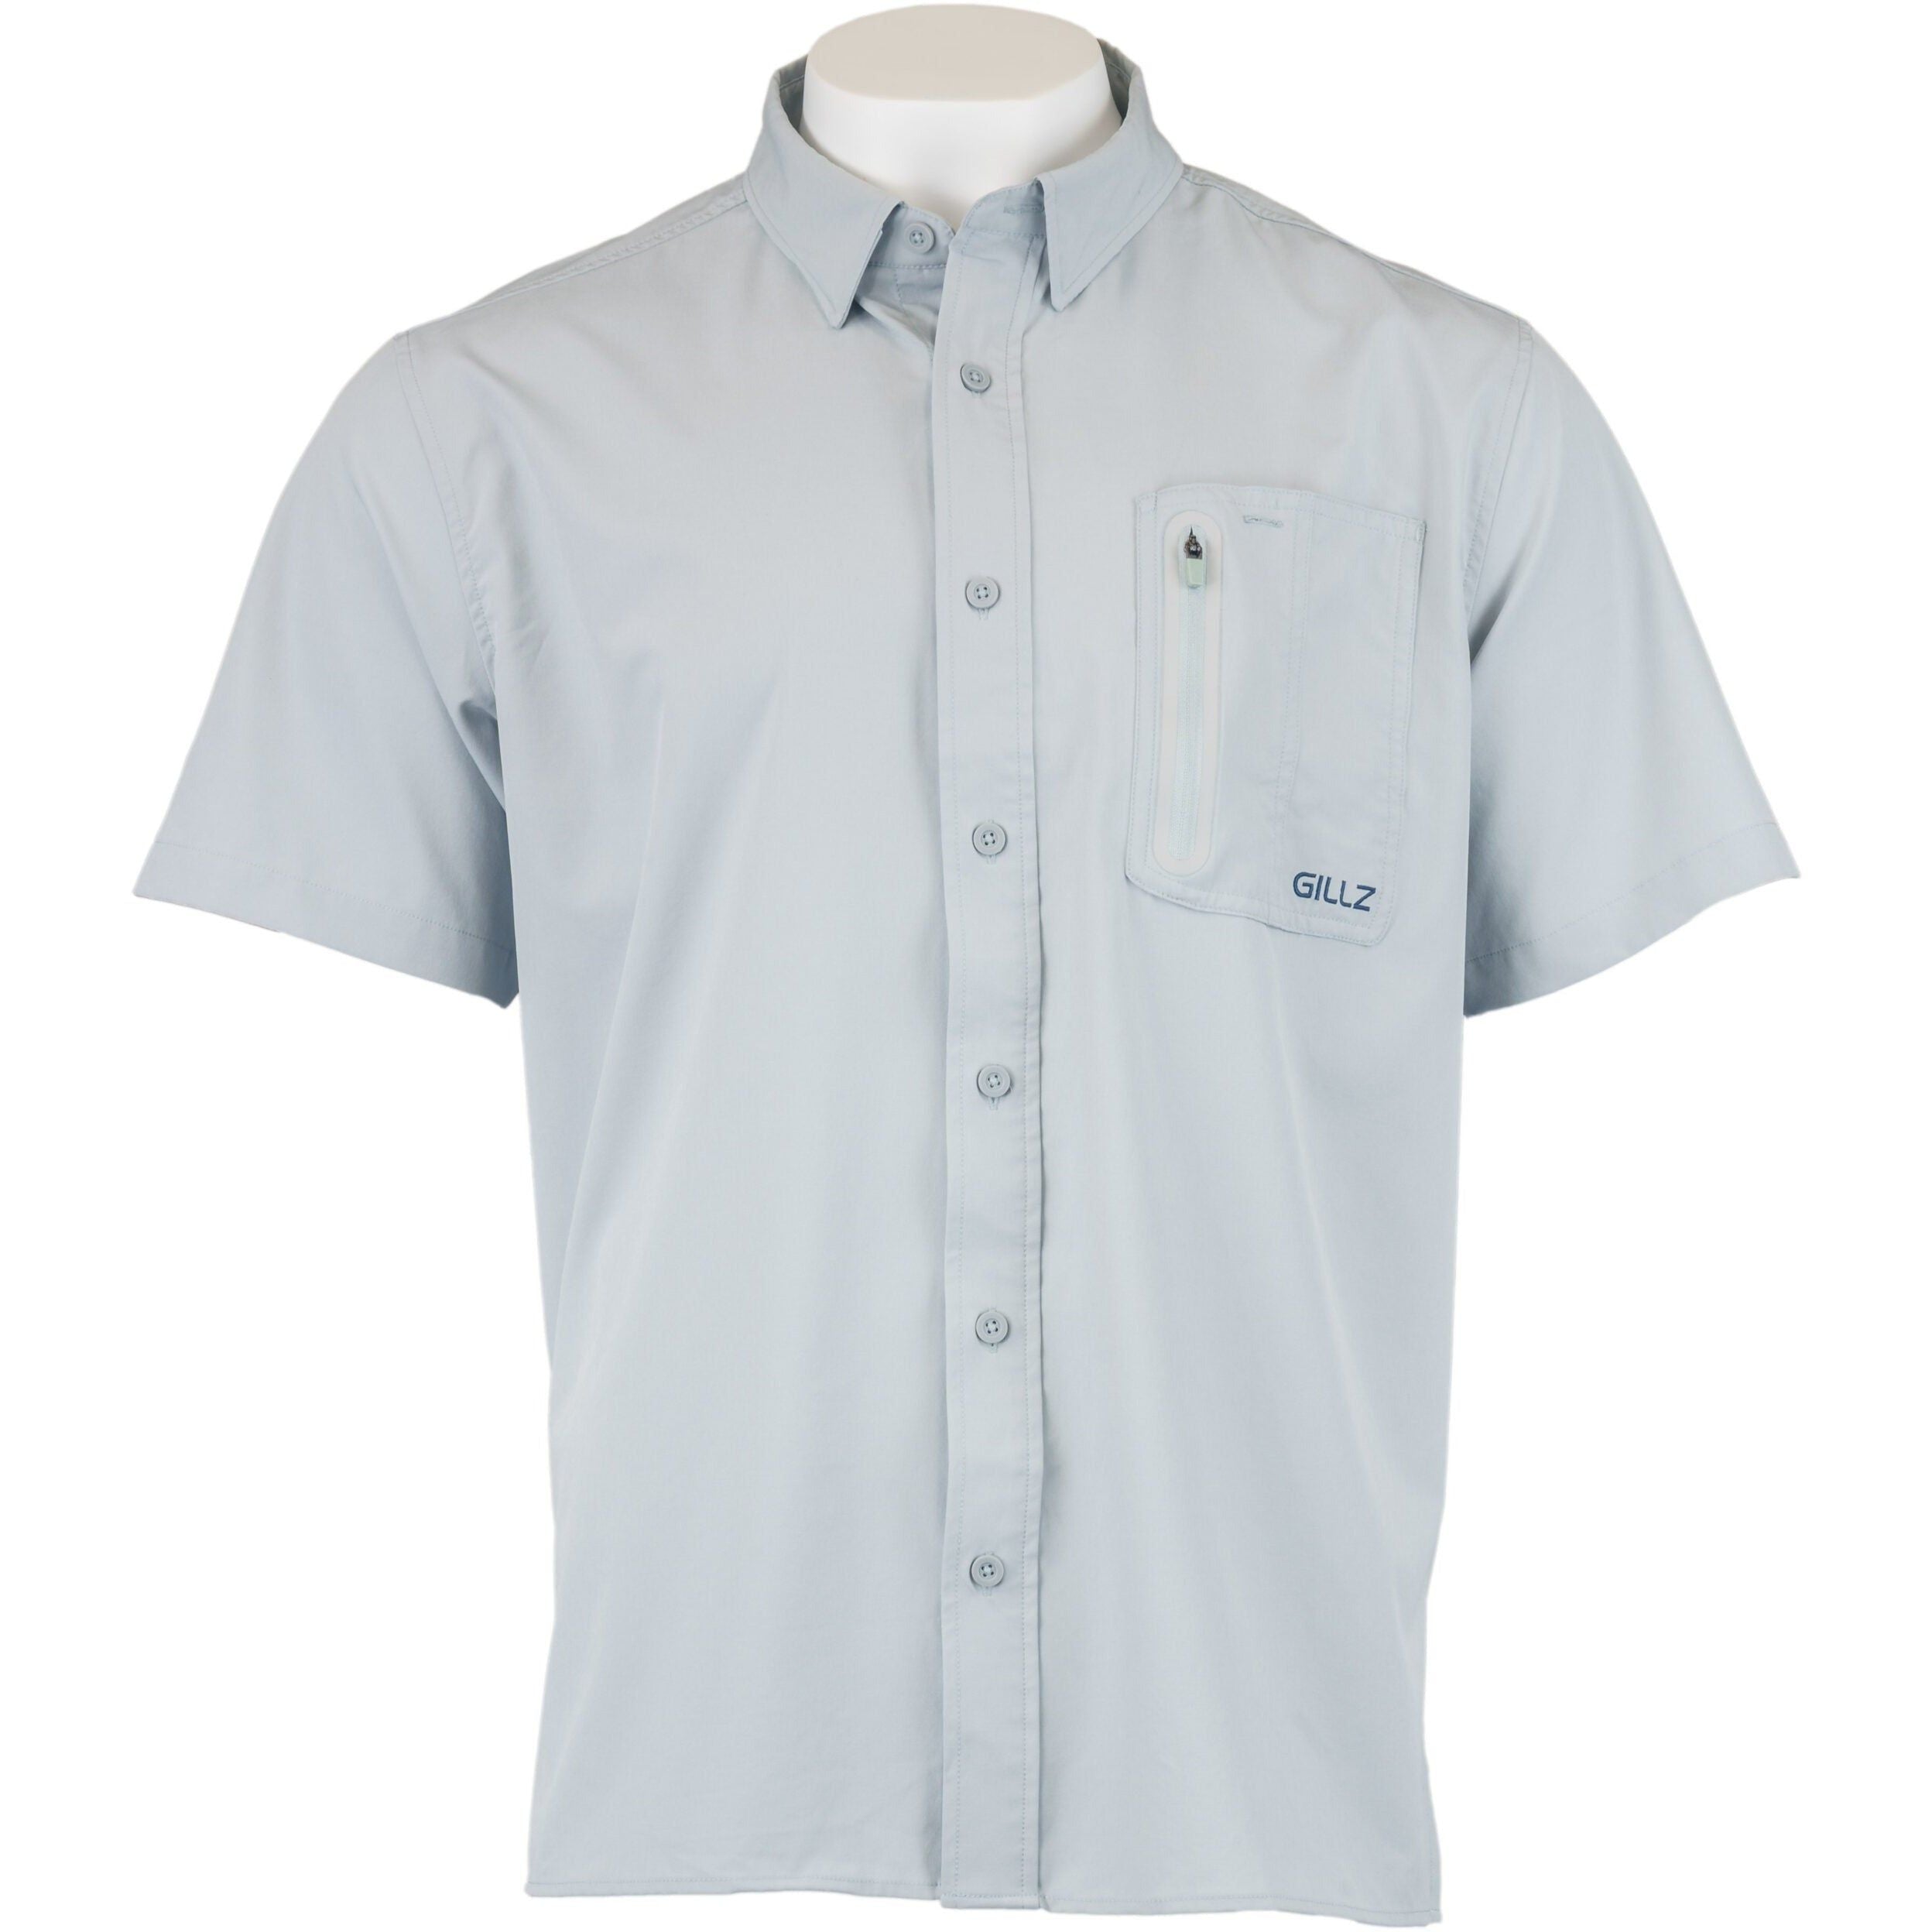 Gillz Men's Deep Sea Woven Shirt - Ocean-inspired style and comfort